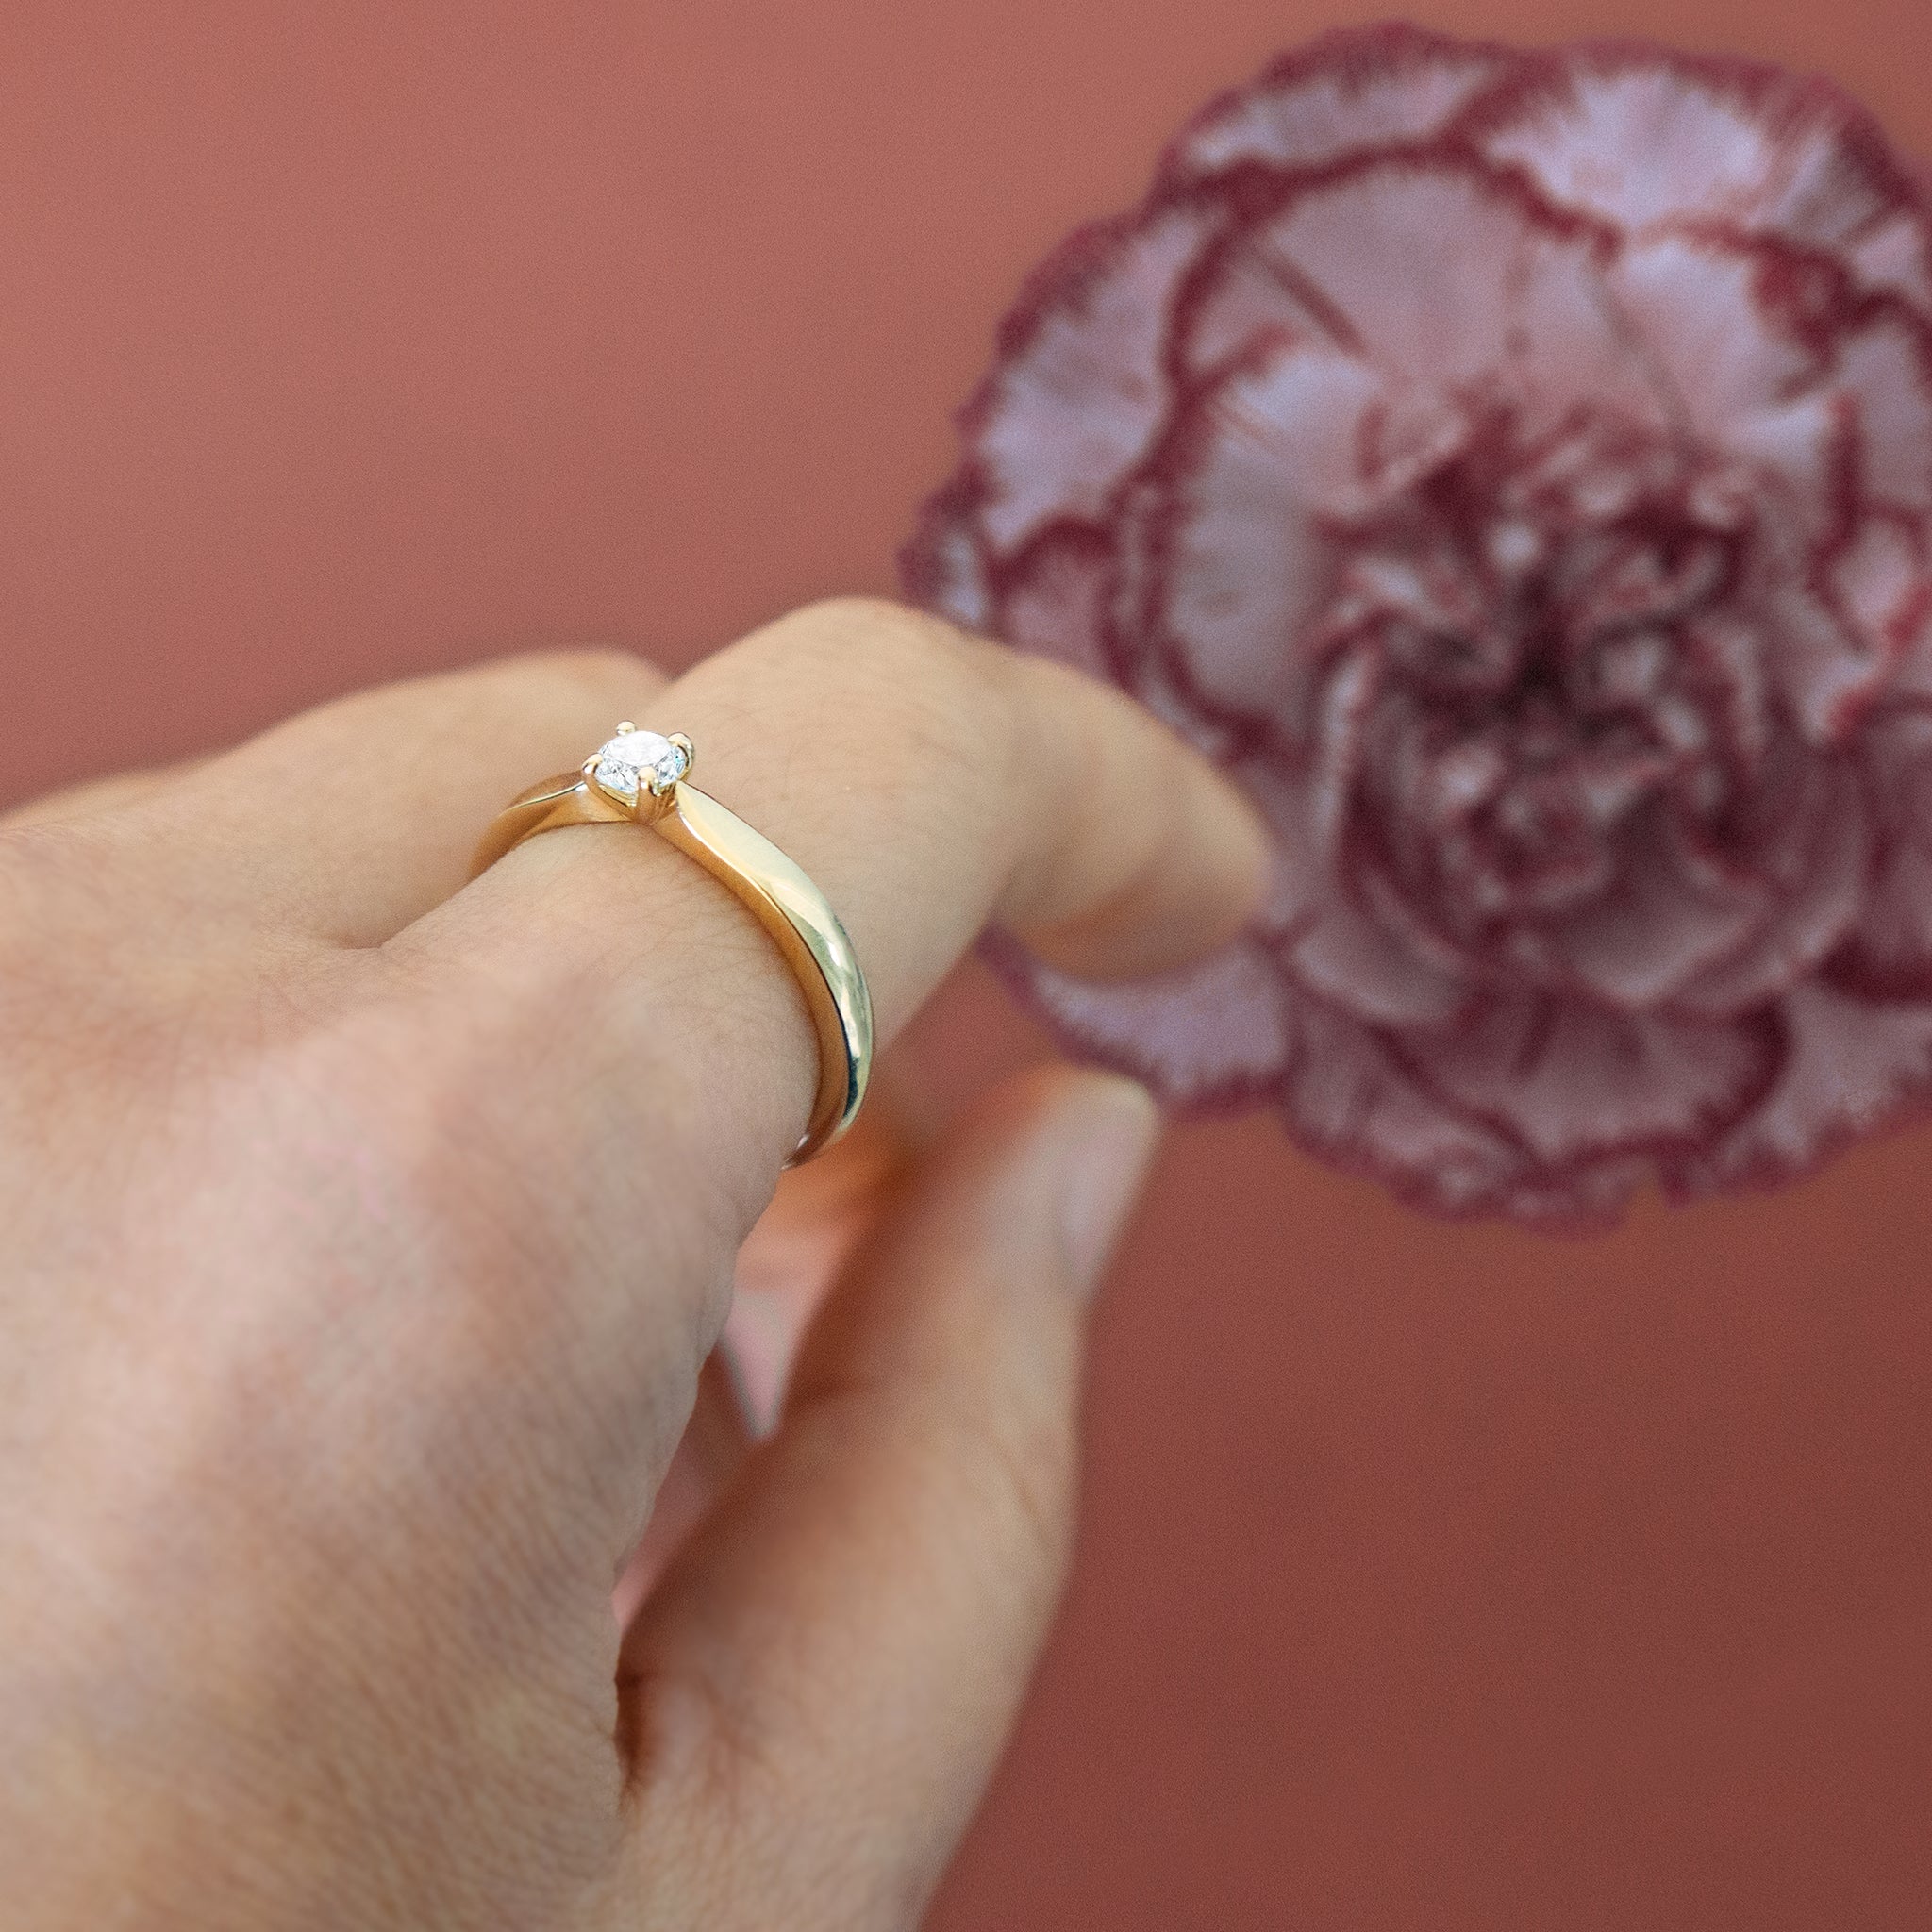 Solitaire yellow gold lab diamond ring on finger - AïANA